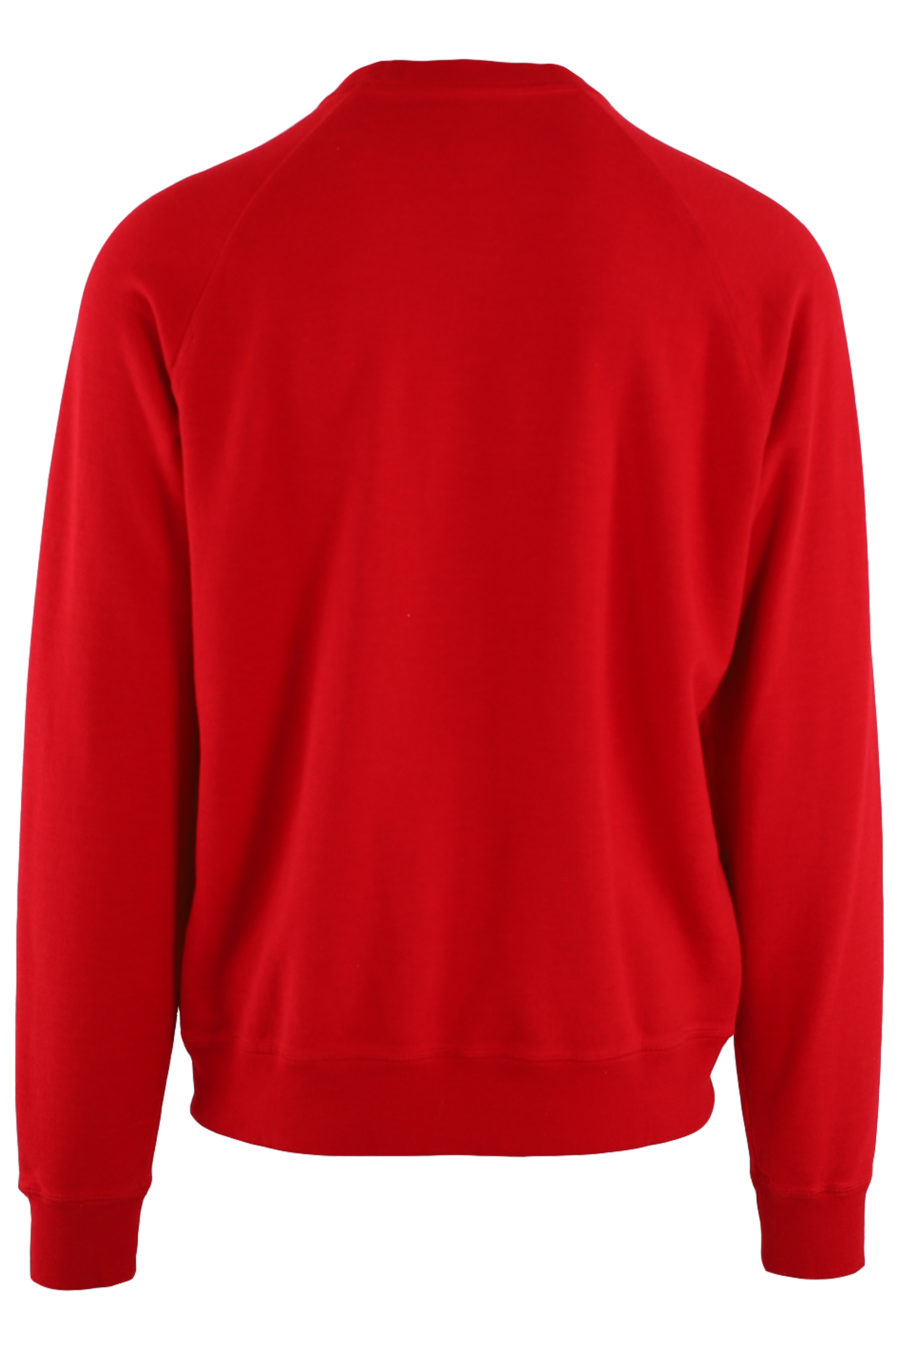 Sudadera roja con logo blanco centrado - IMG 8765